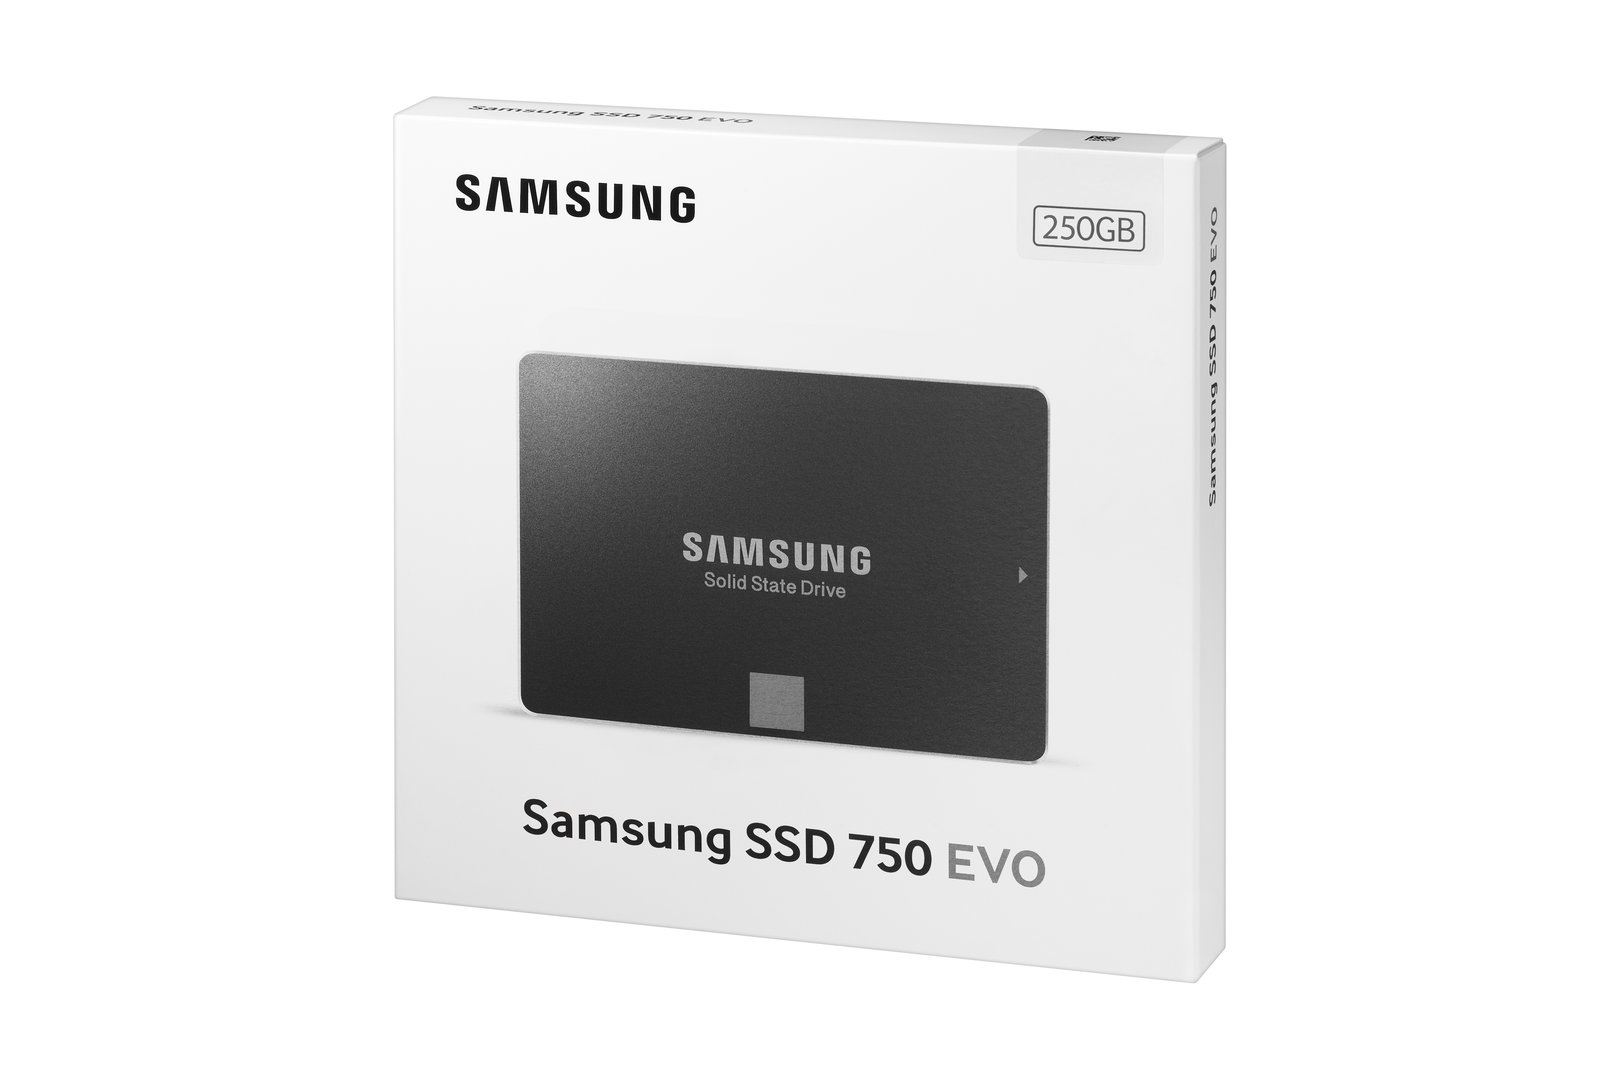 Samsung SSD 750 Evo